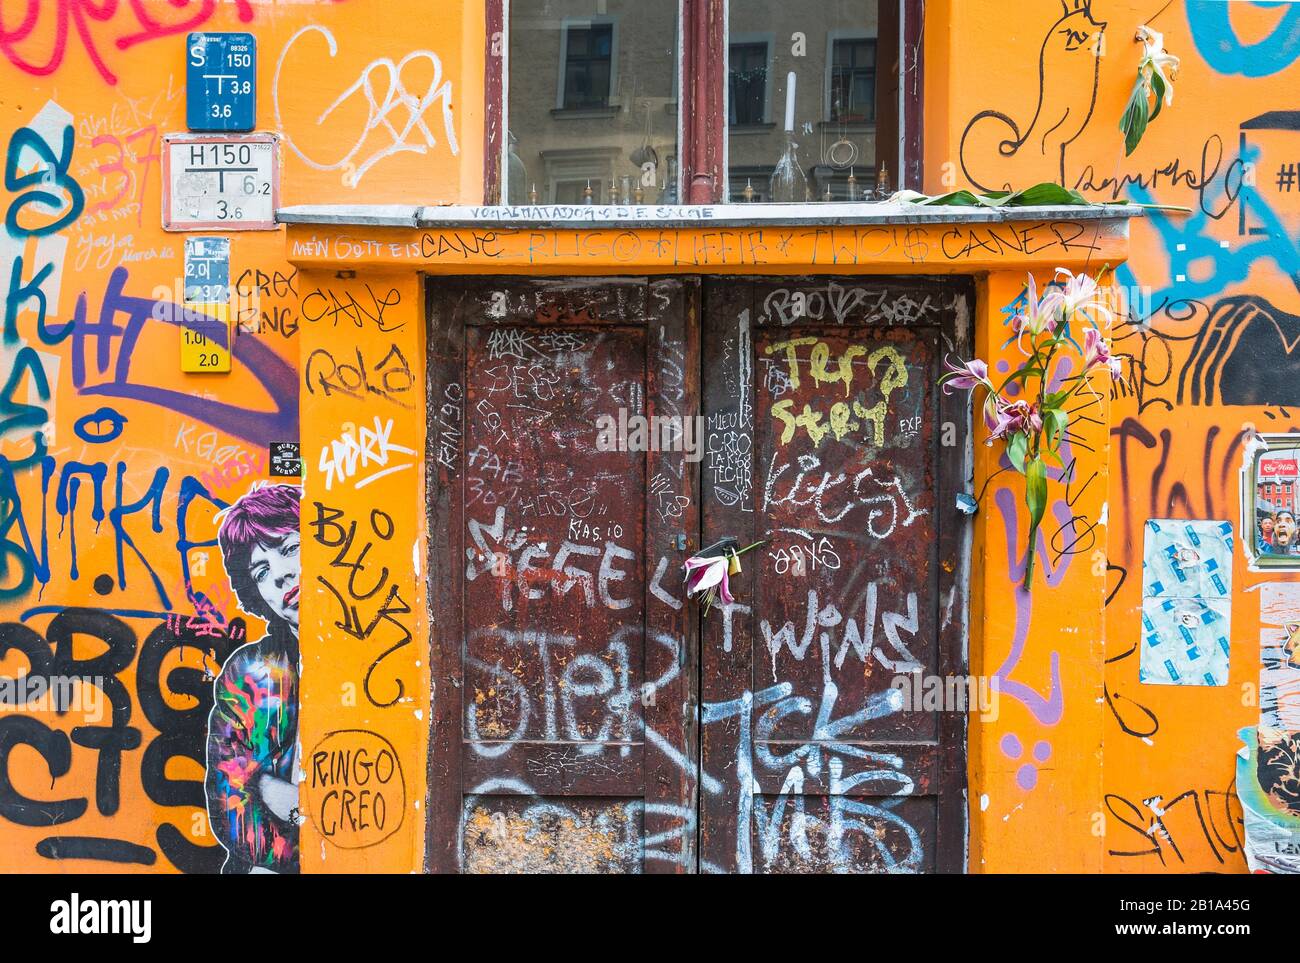 red house door, graffiti, wheatpaste art, Stock Photo